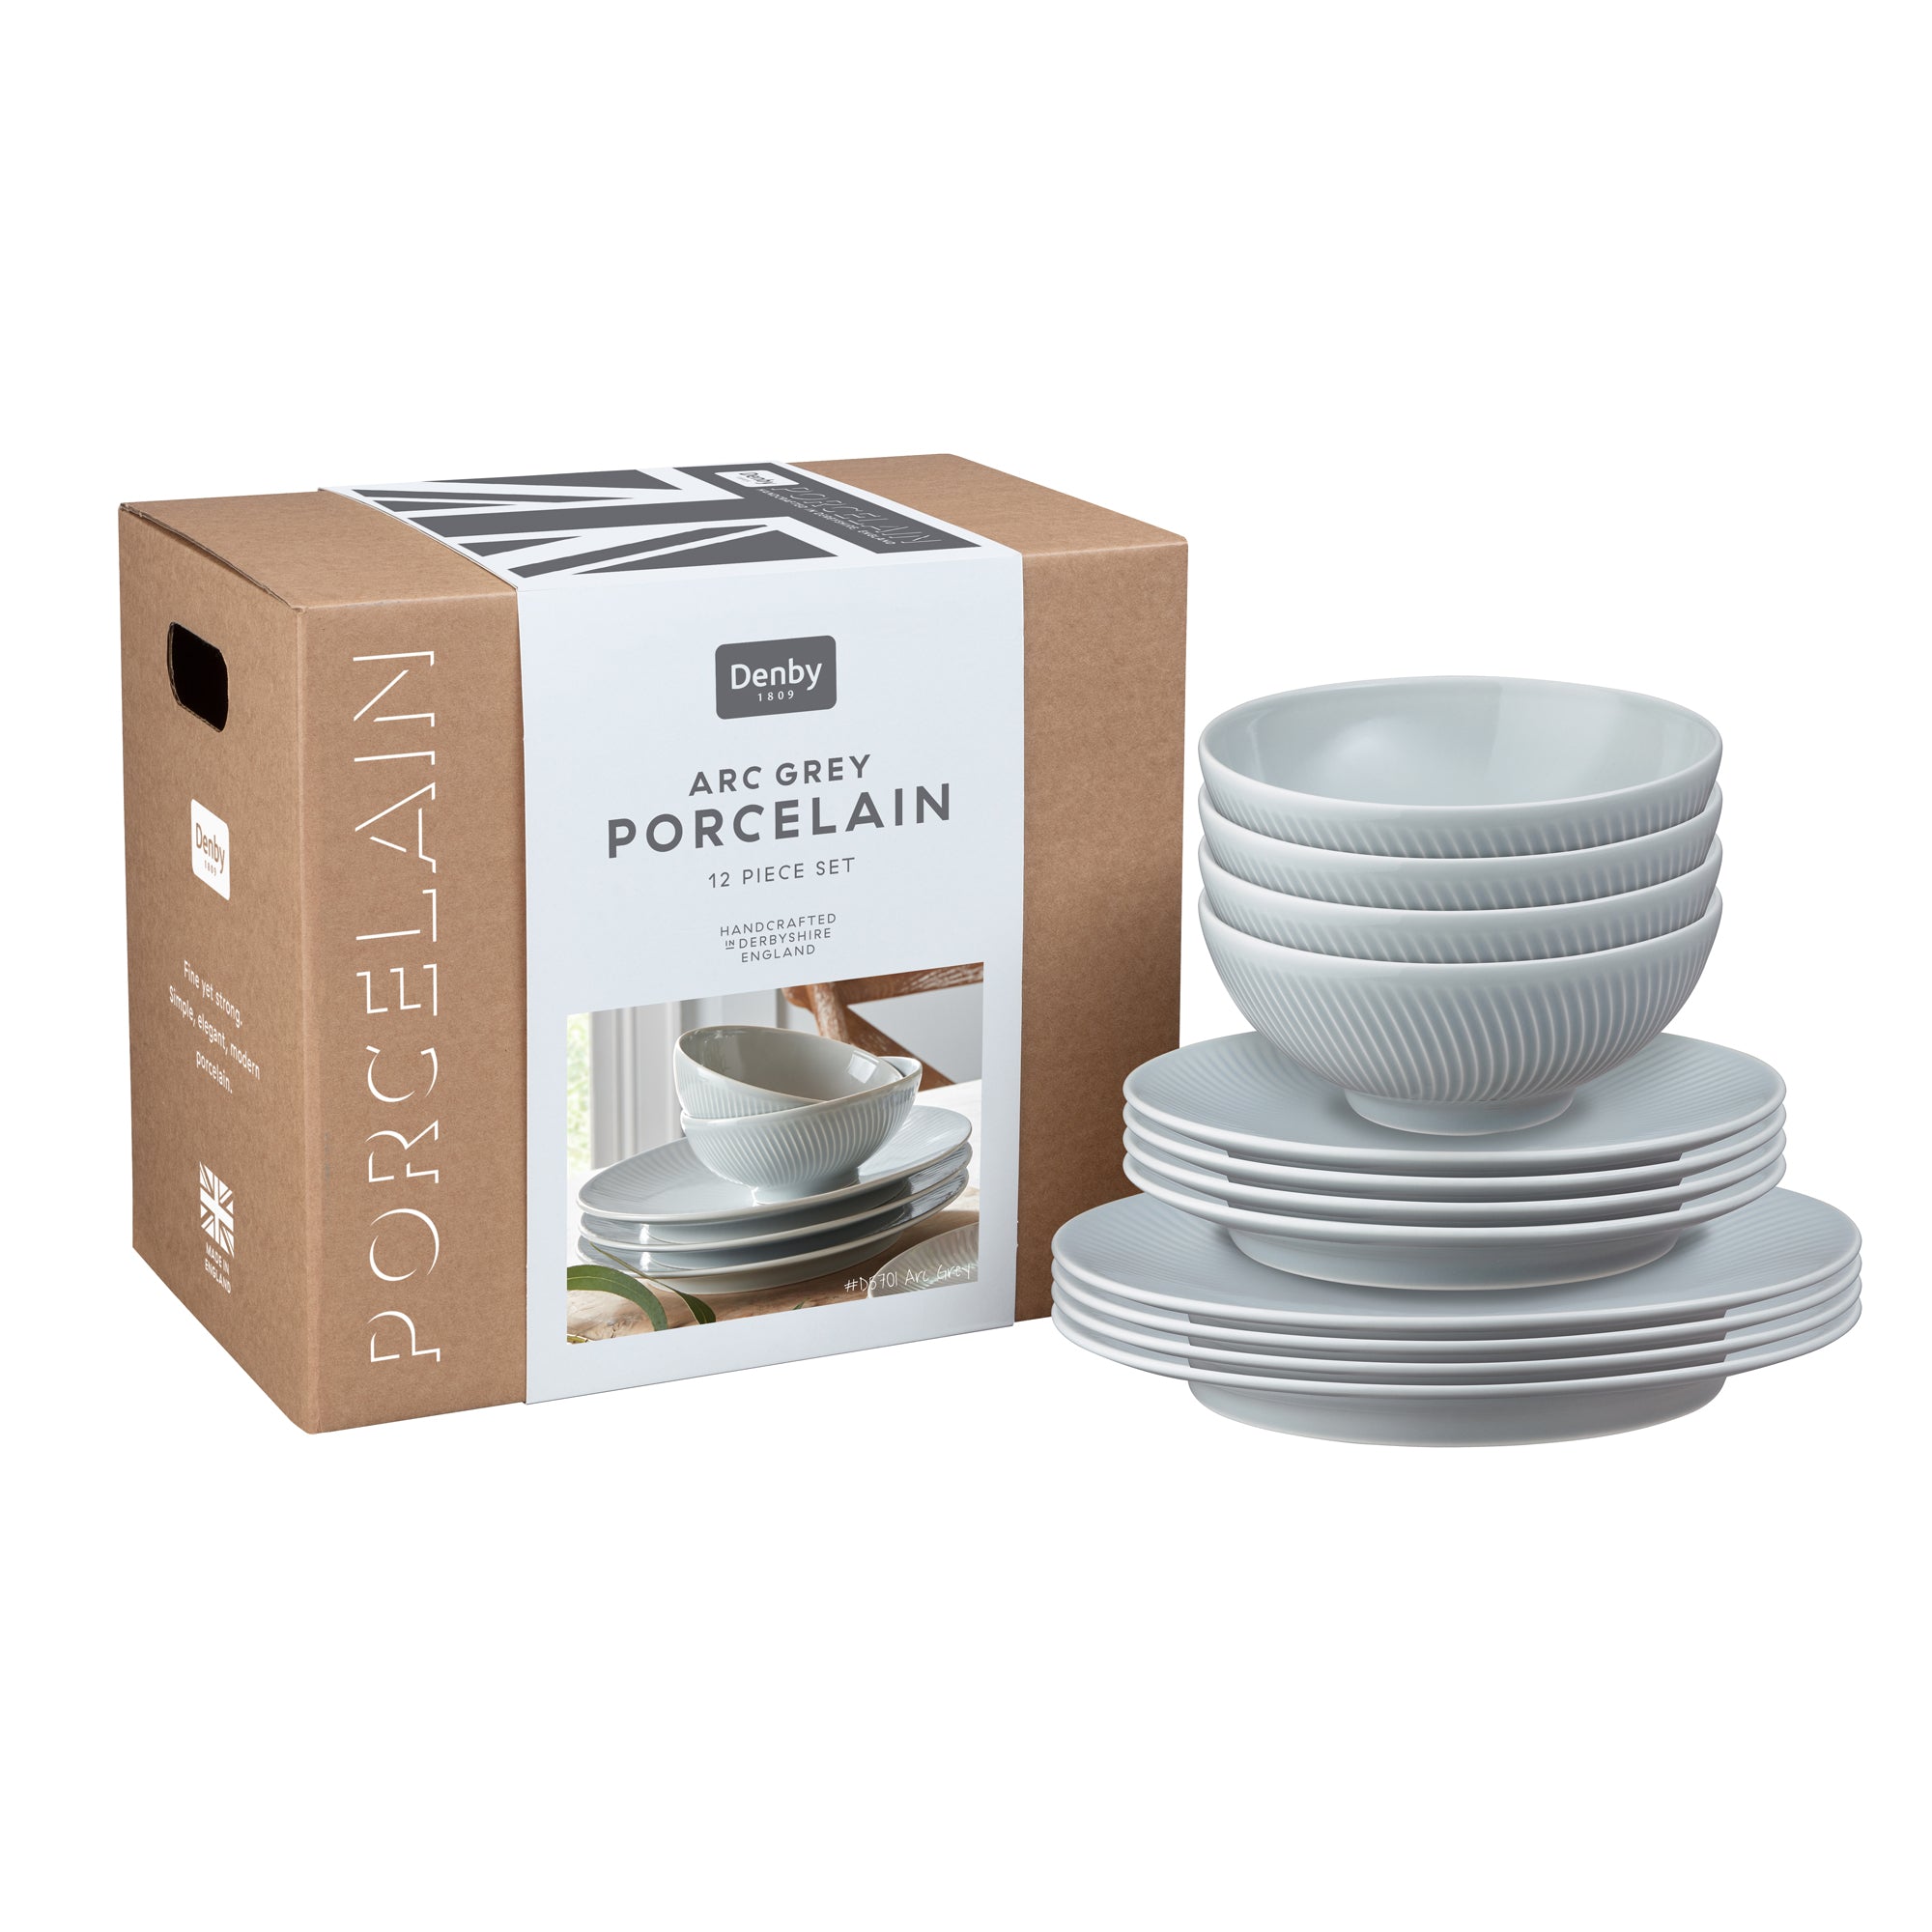 Denby Porcelain Arc Grey 12 Piece Tableware Set